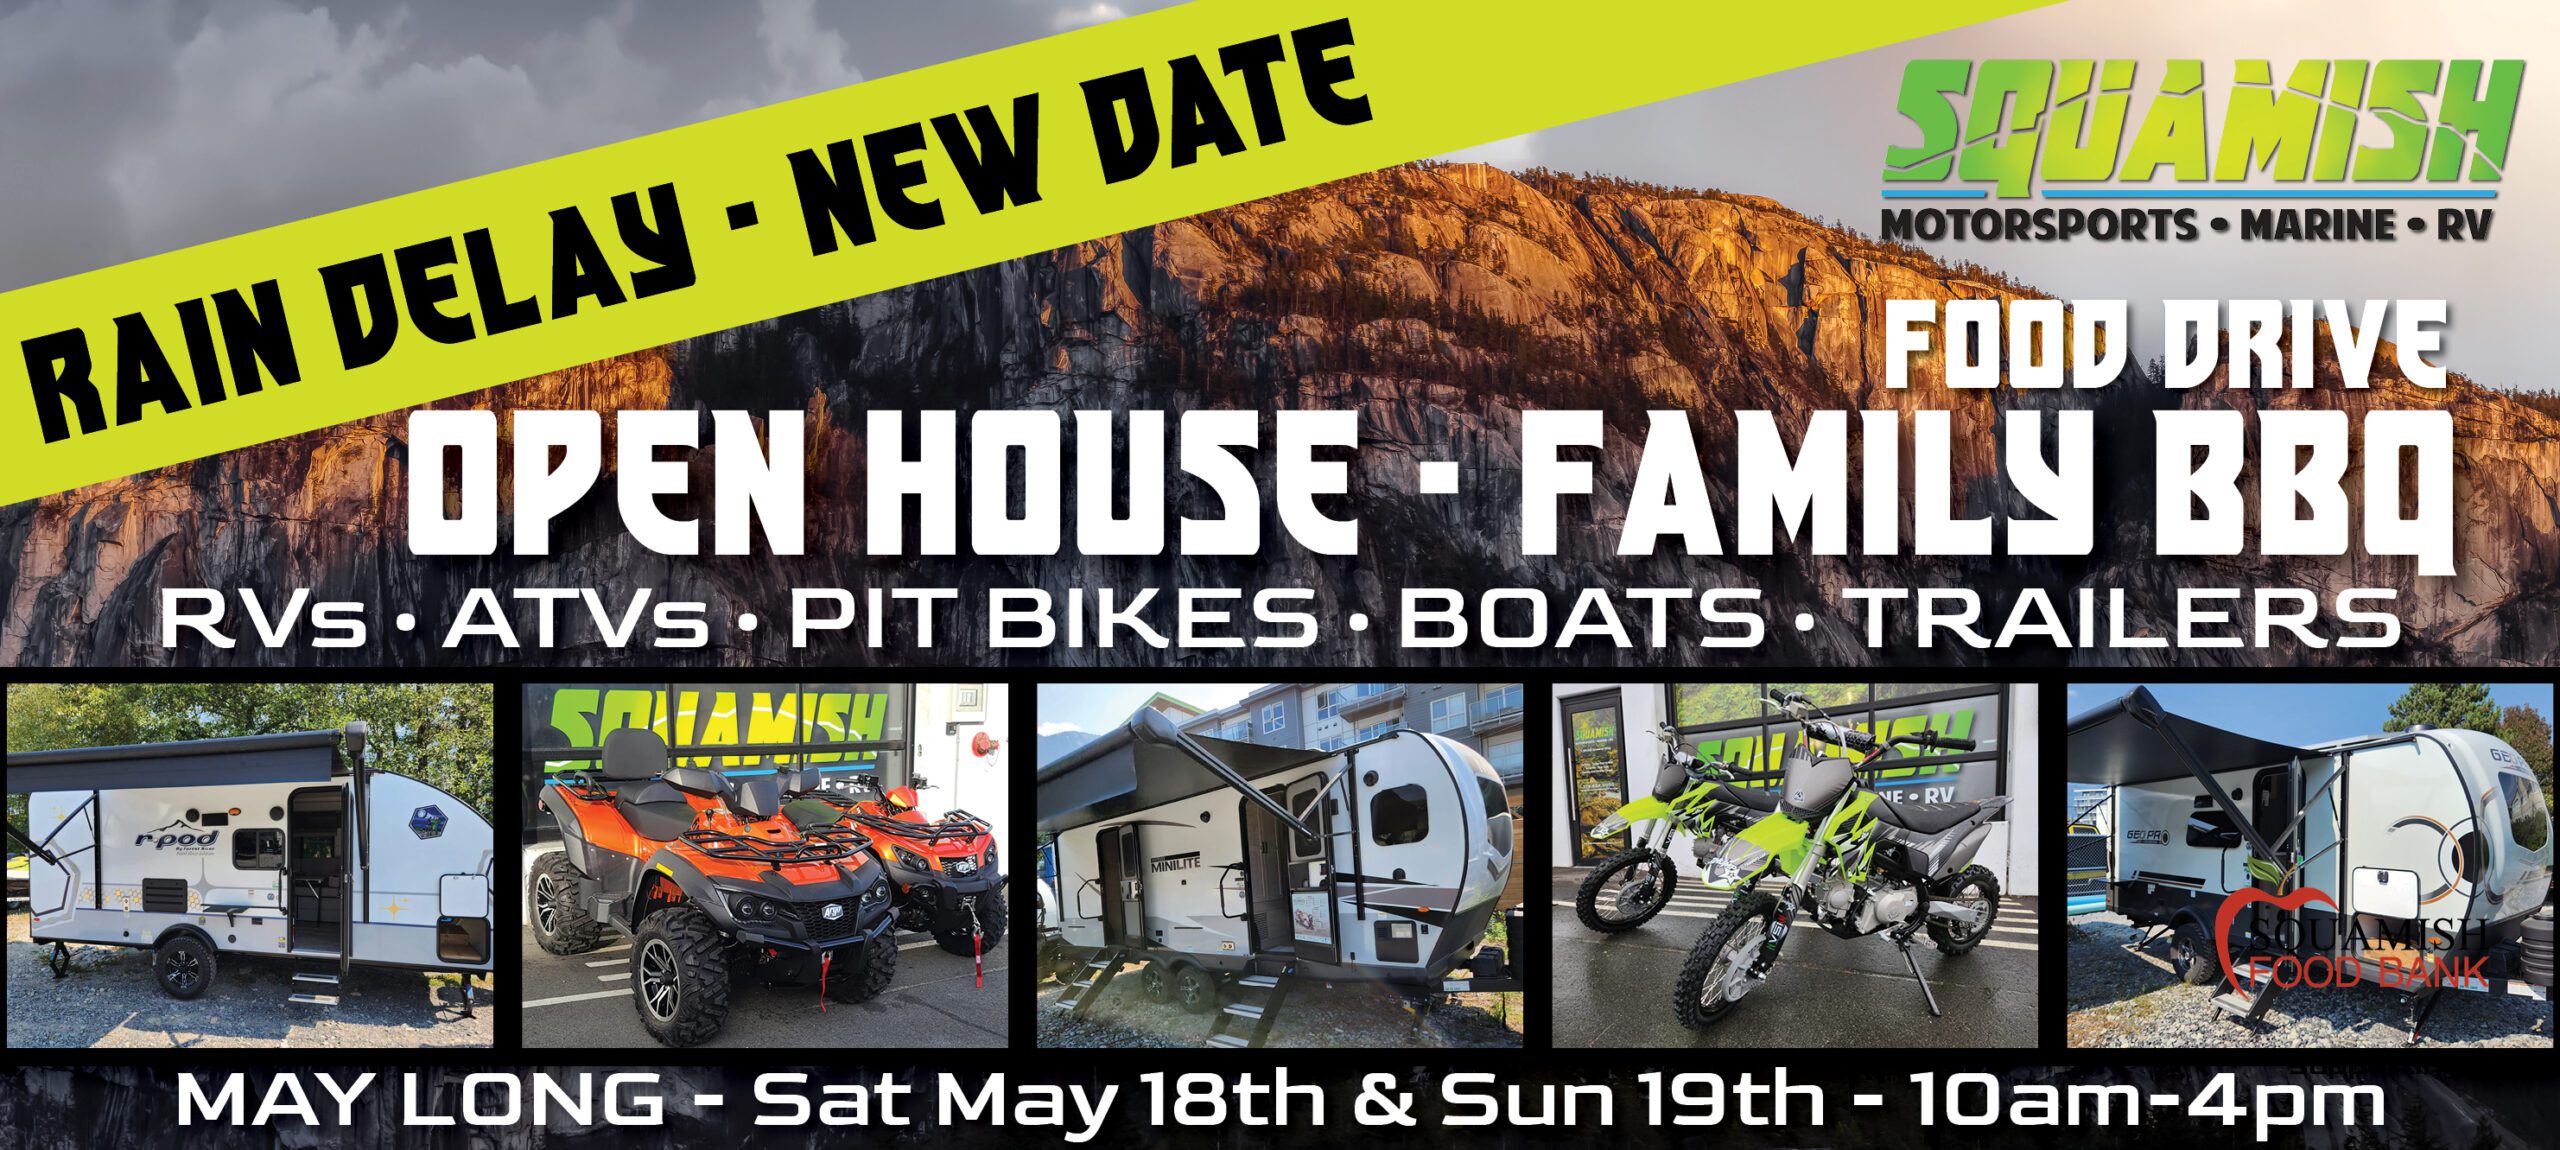 Spring Open House - BBQ - Food Drive at Squamish Motorsports. An RV, ATV, Dirt Bike, Boat Showcase